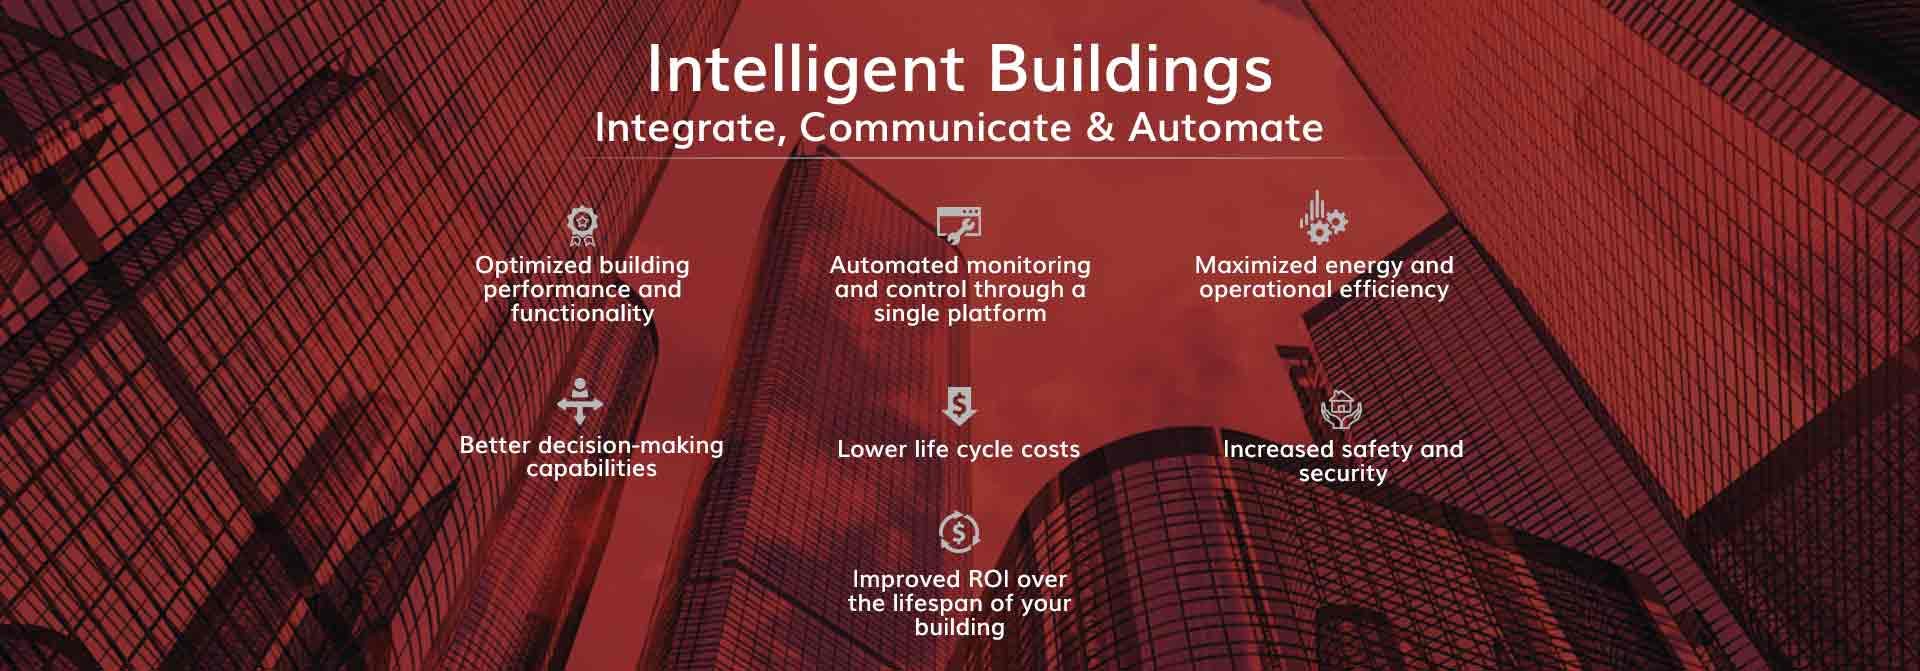 Intelligence-Building.jpg